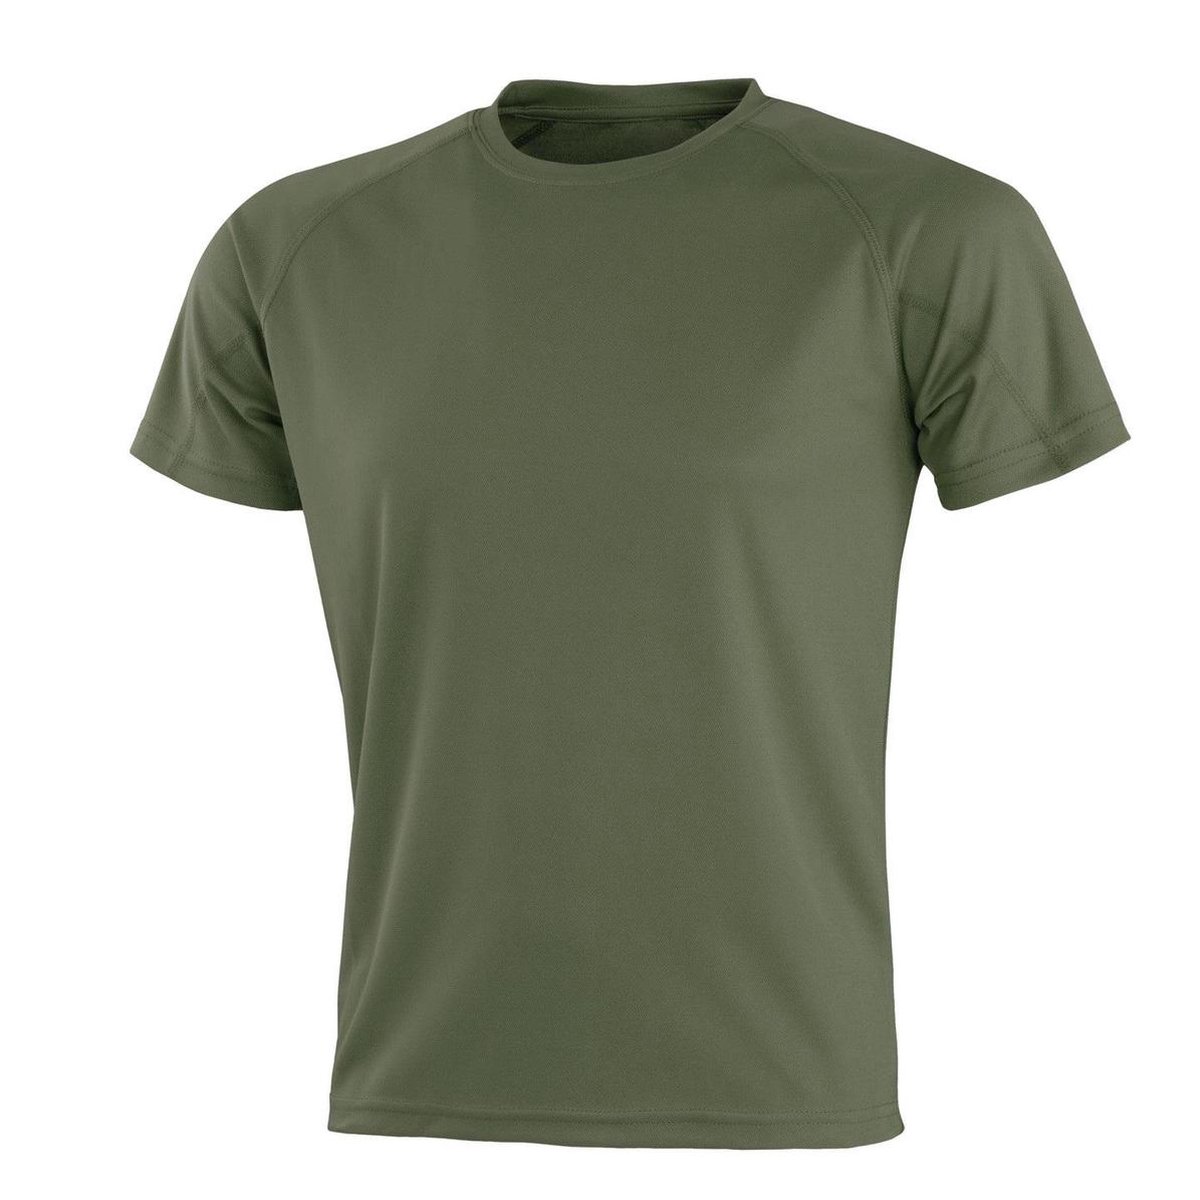 Senvi Sports Performance T-Shirt - Olive - XS - Unisex